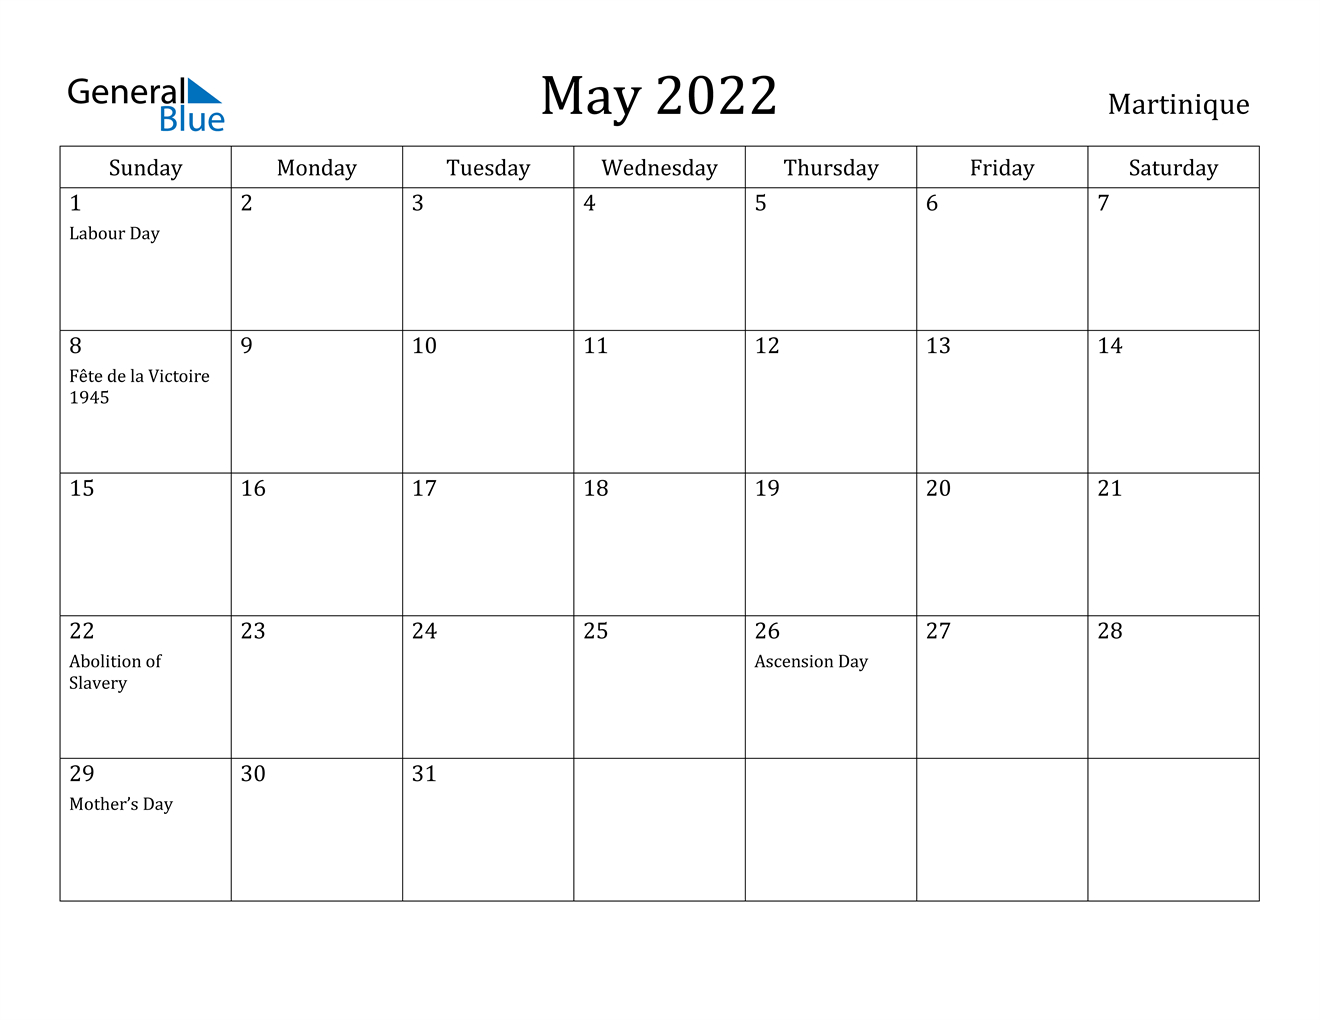 May 2022 Calendar - Martinique